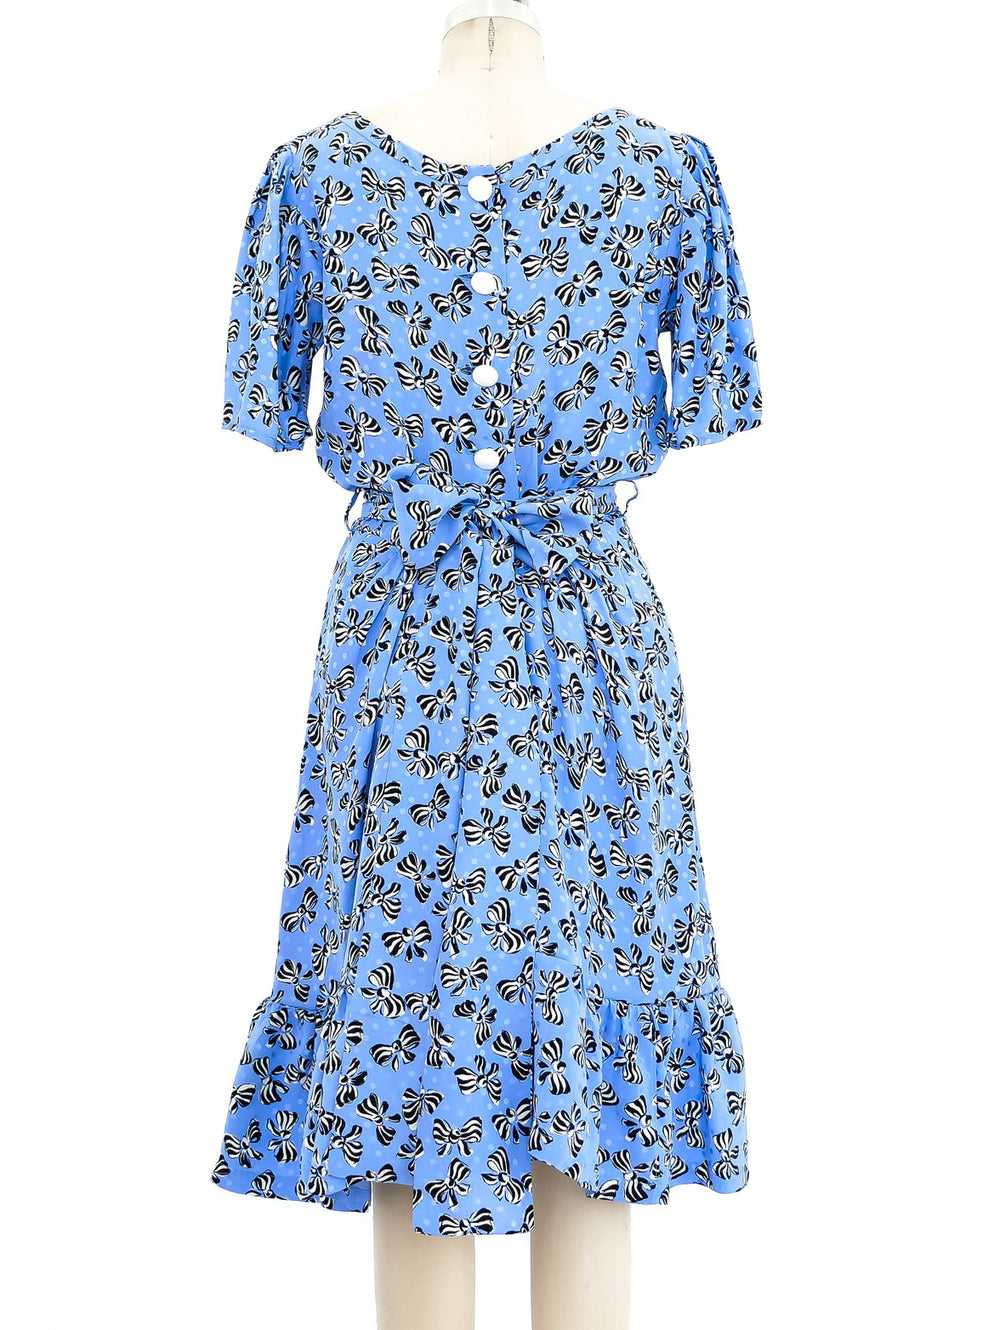 Yves Saint Laurent Bow Print Dress - image 2